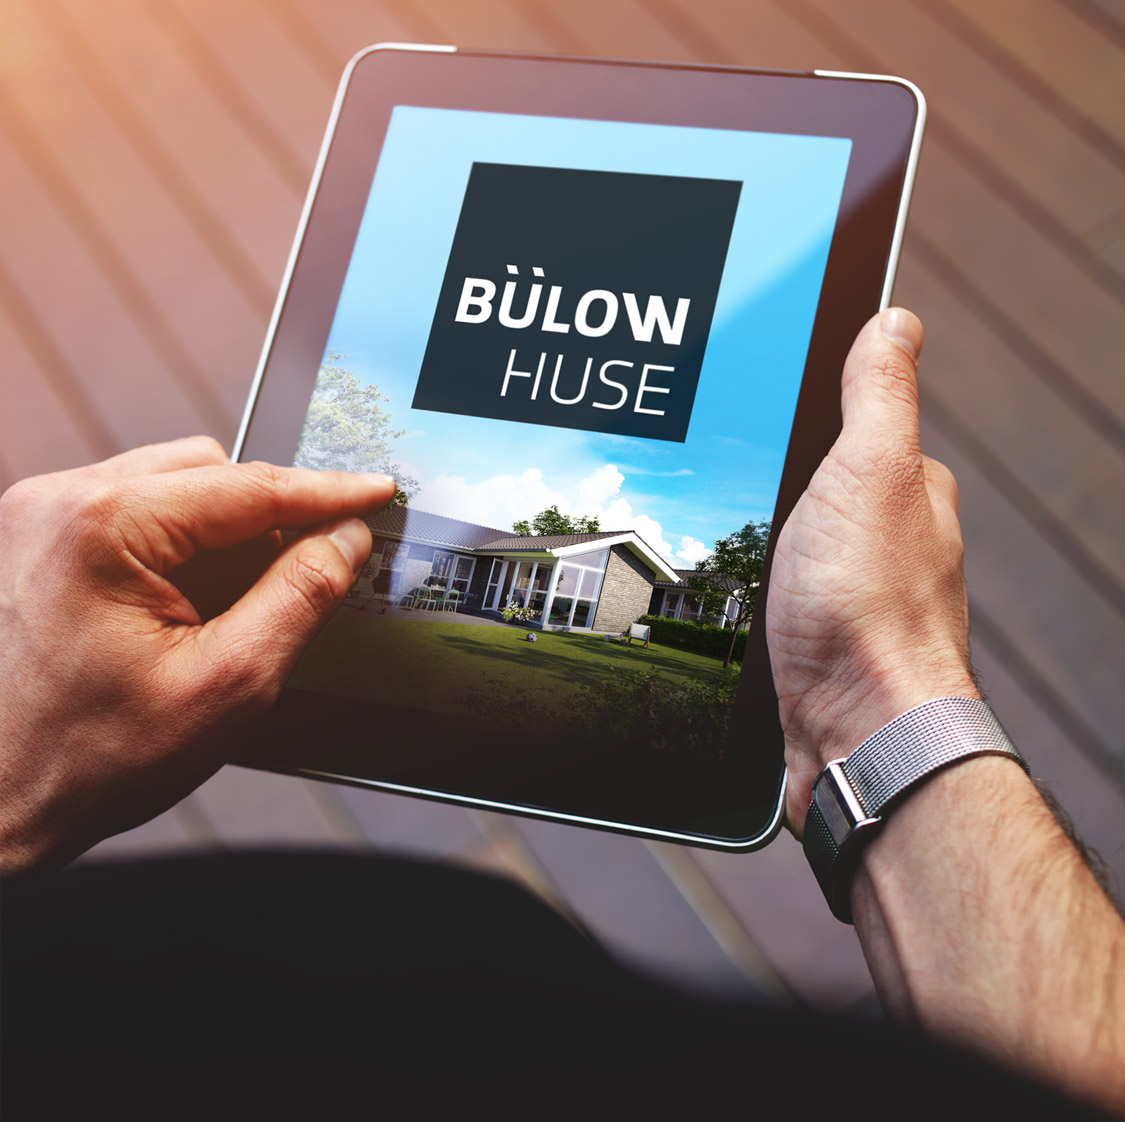 Bulow Huse / Real Estate Developer